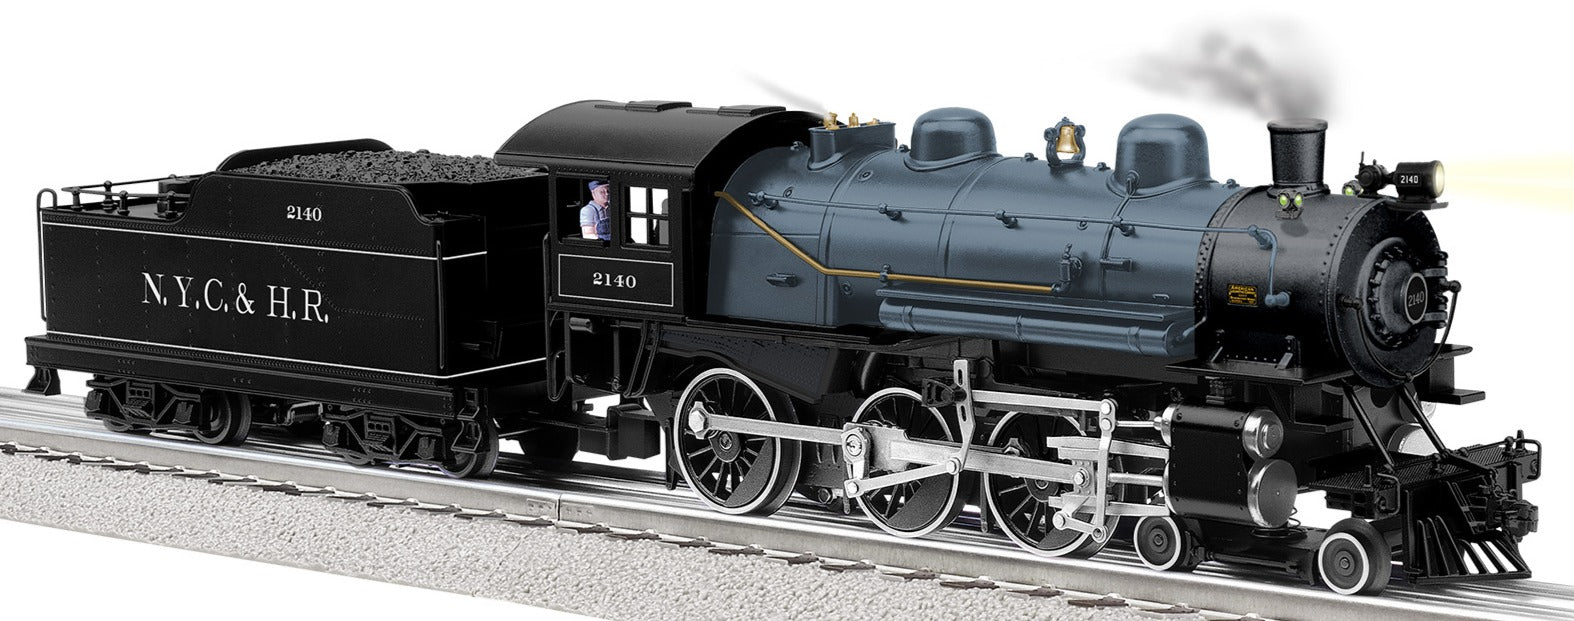 Lionel 2431650 - Legacy 4-6-0 Steam Locomotive "New York Central & Hudson River" #2140